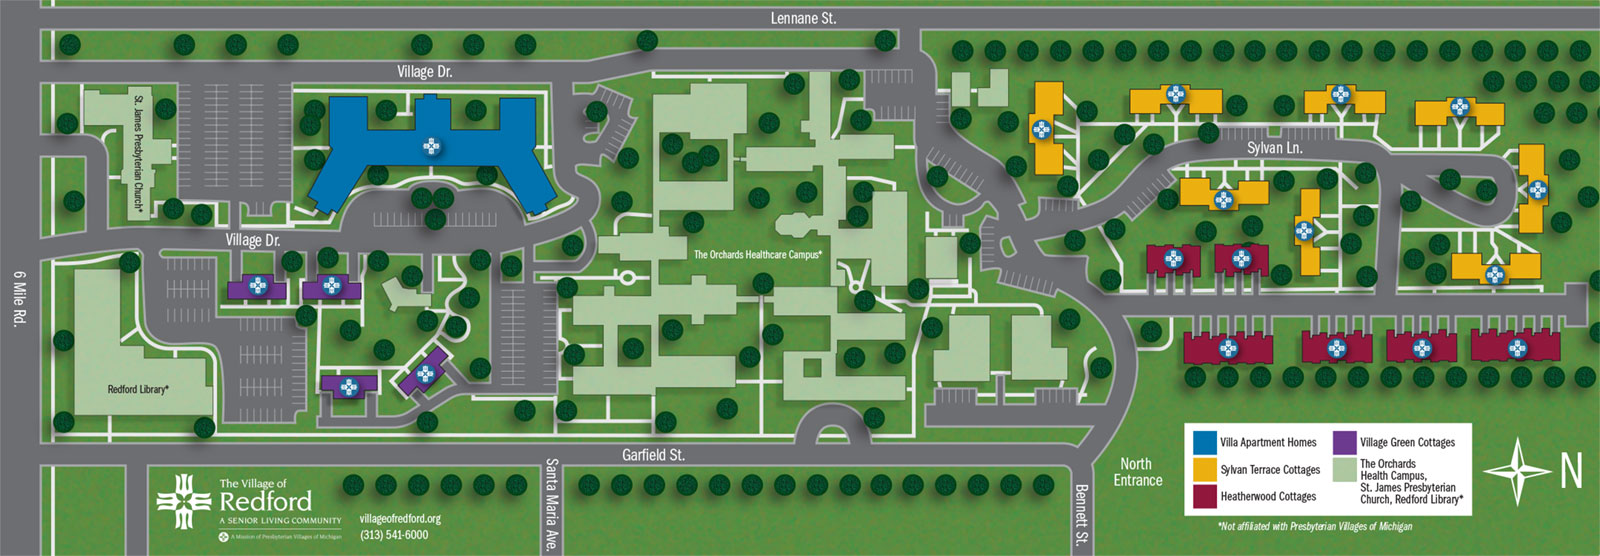 Village of Redford campus map image